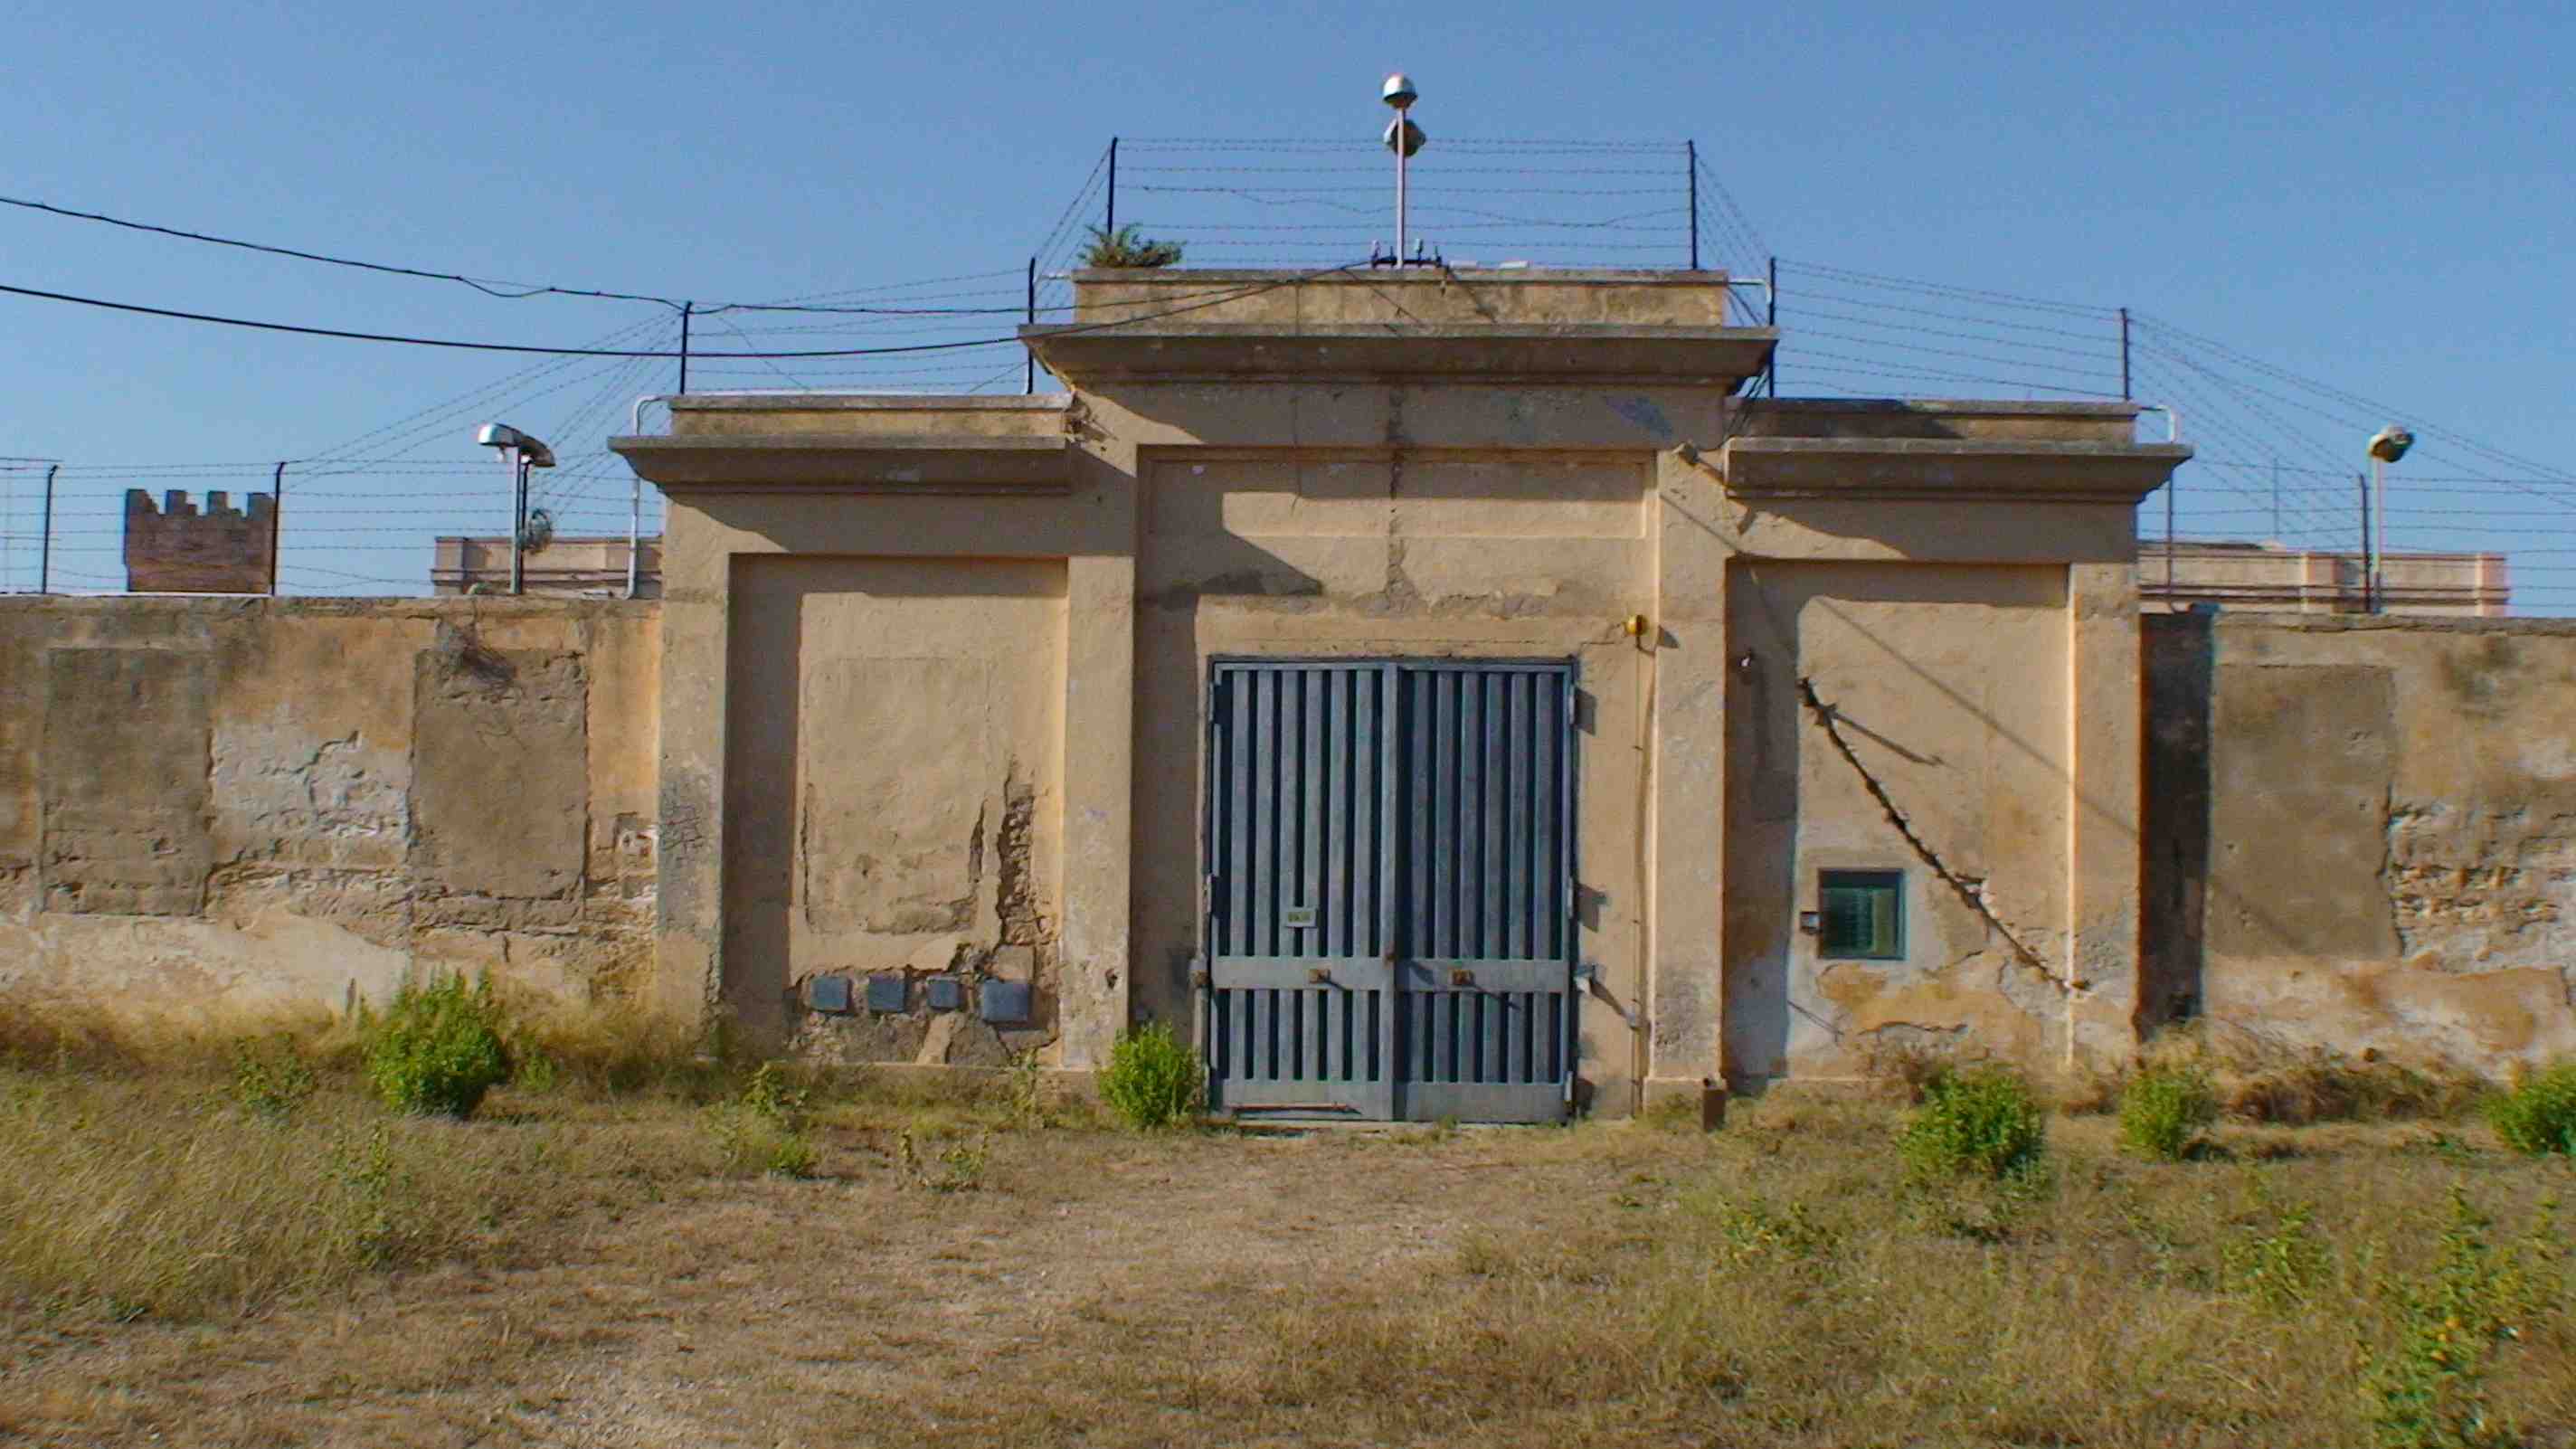 Photo of Pianosa Prison on the Island of Pianosa